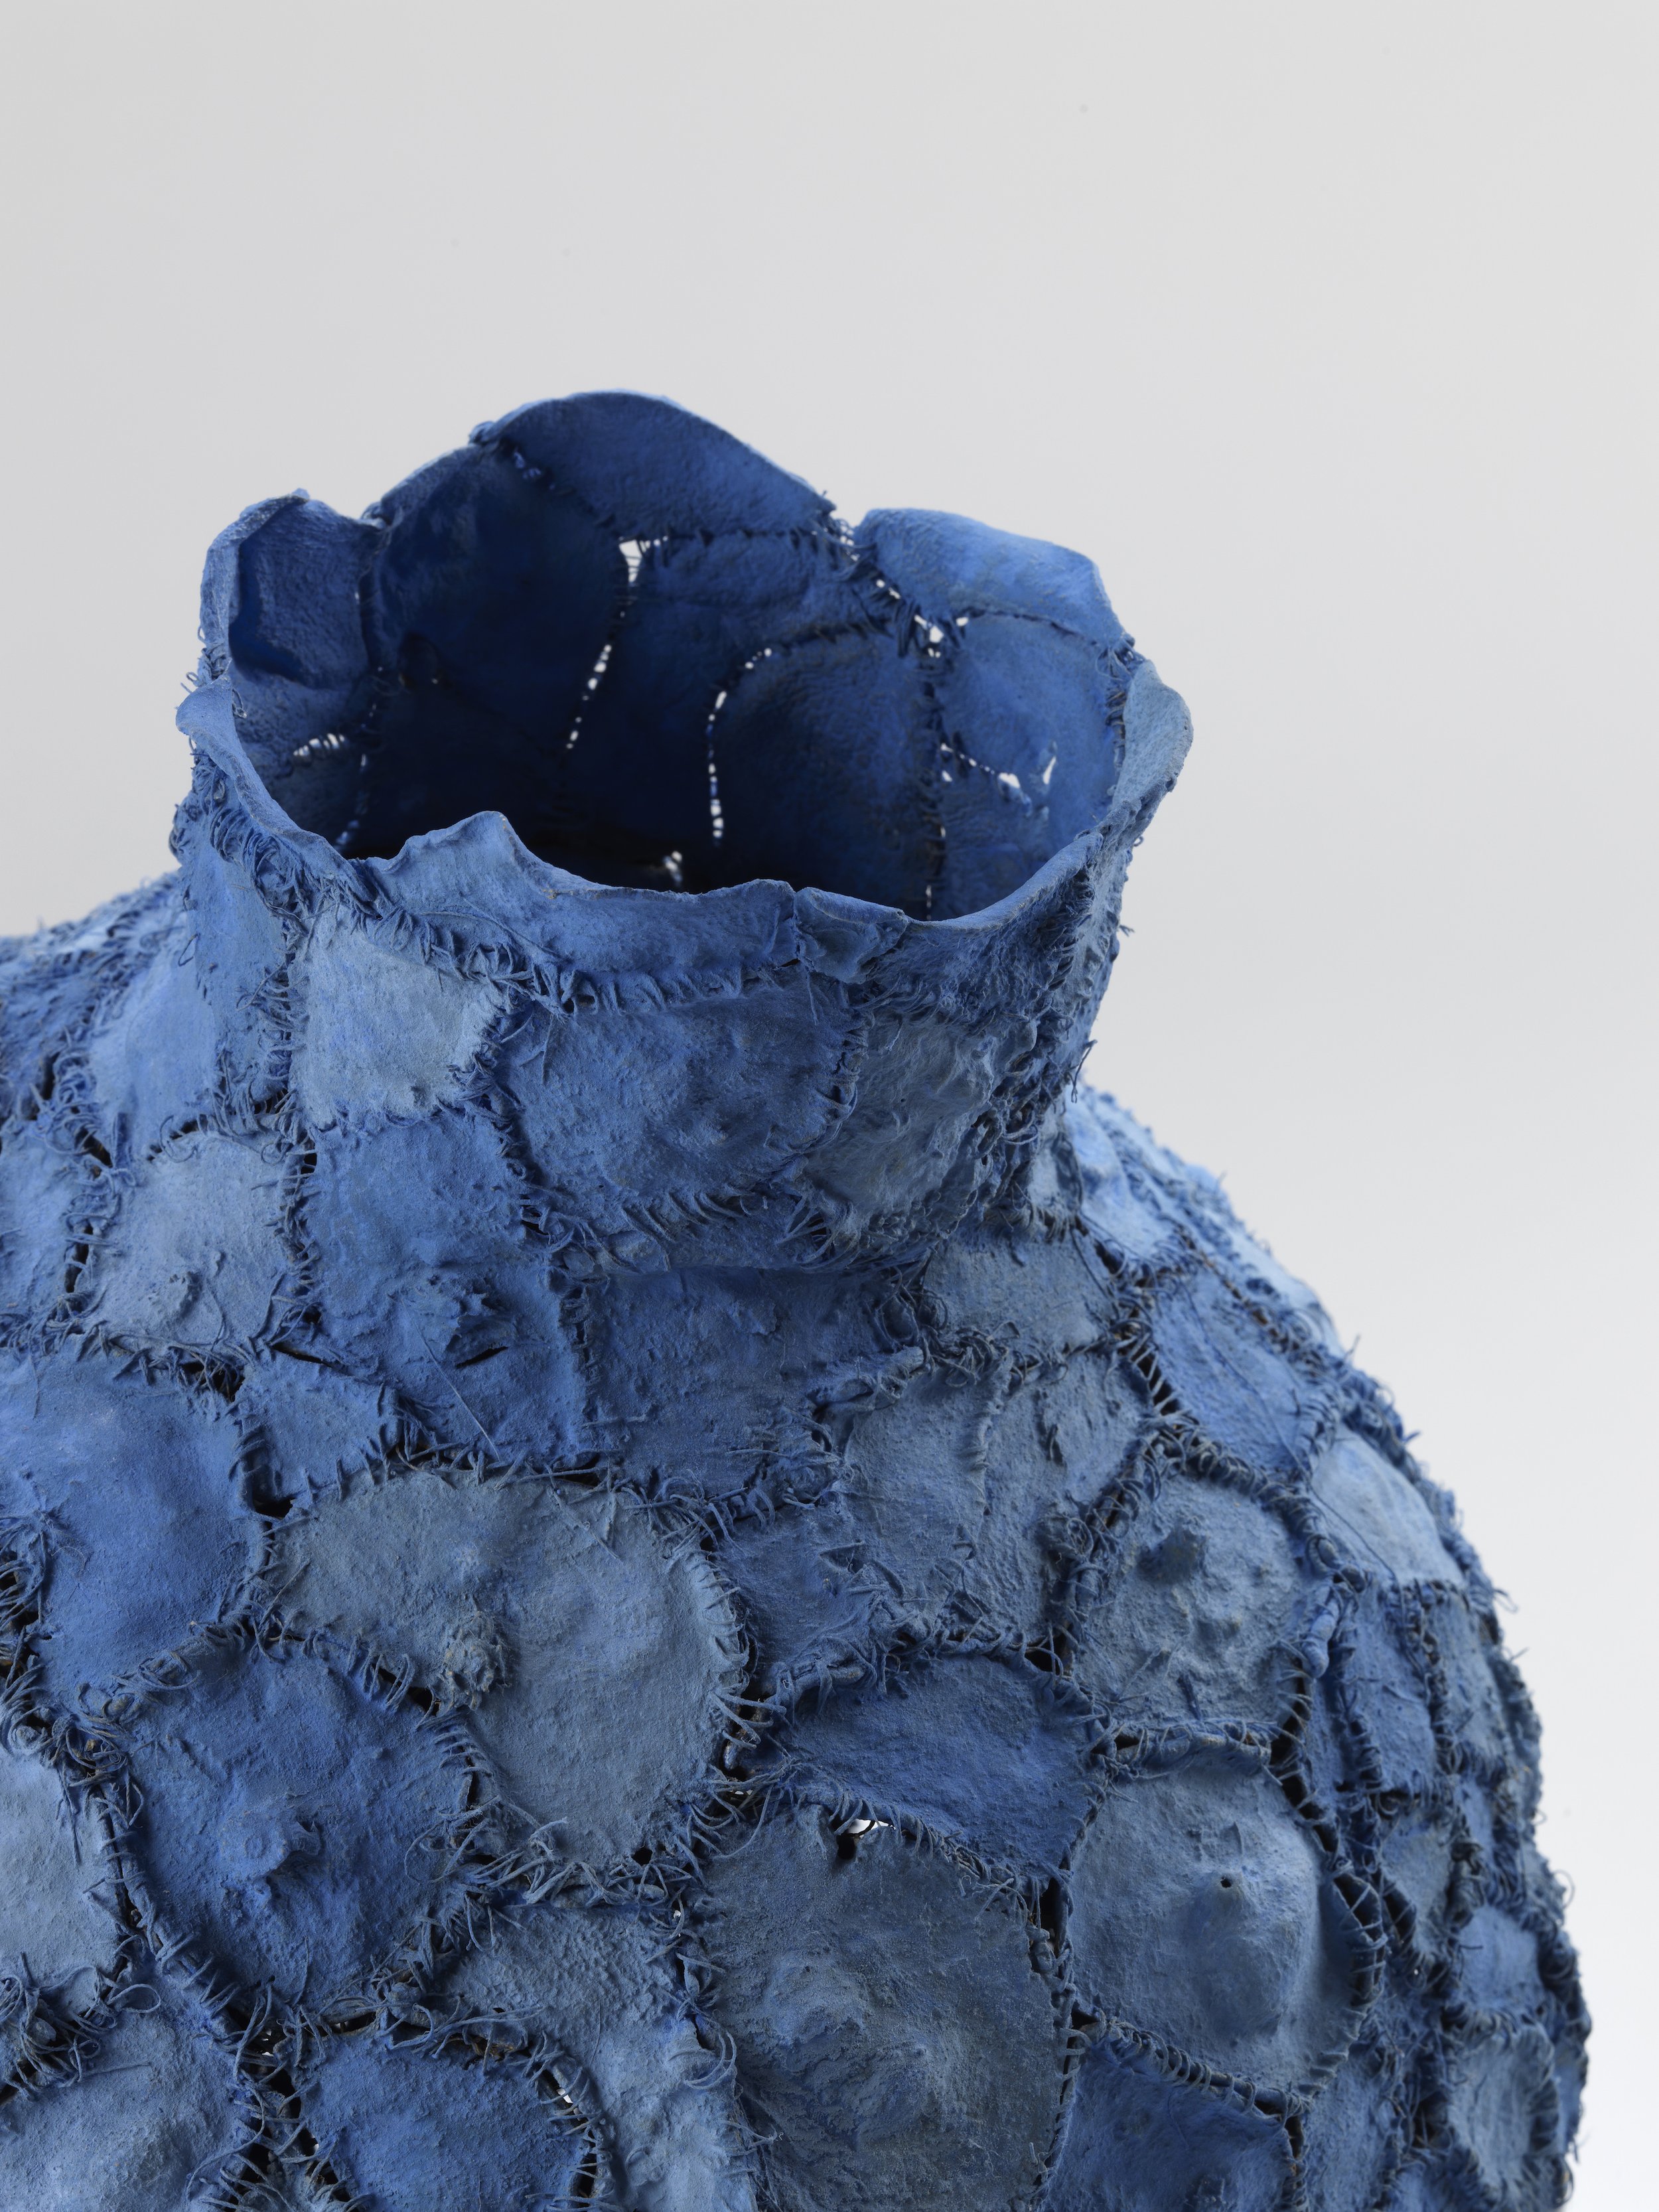 Copia de L&C Lab_Biomater Light Blue Vase sculpture (3).jpg